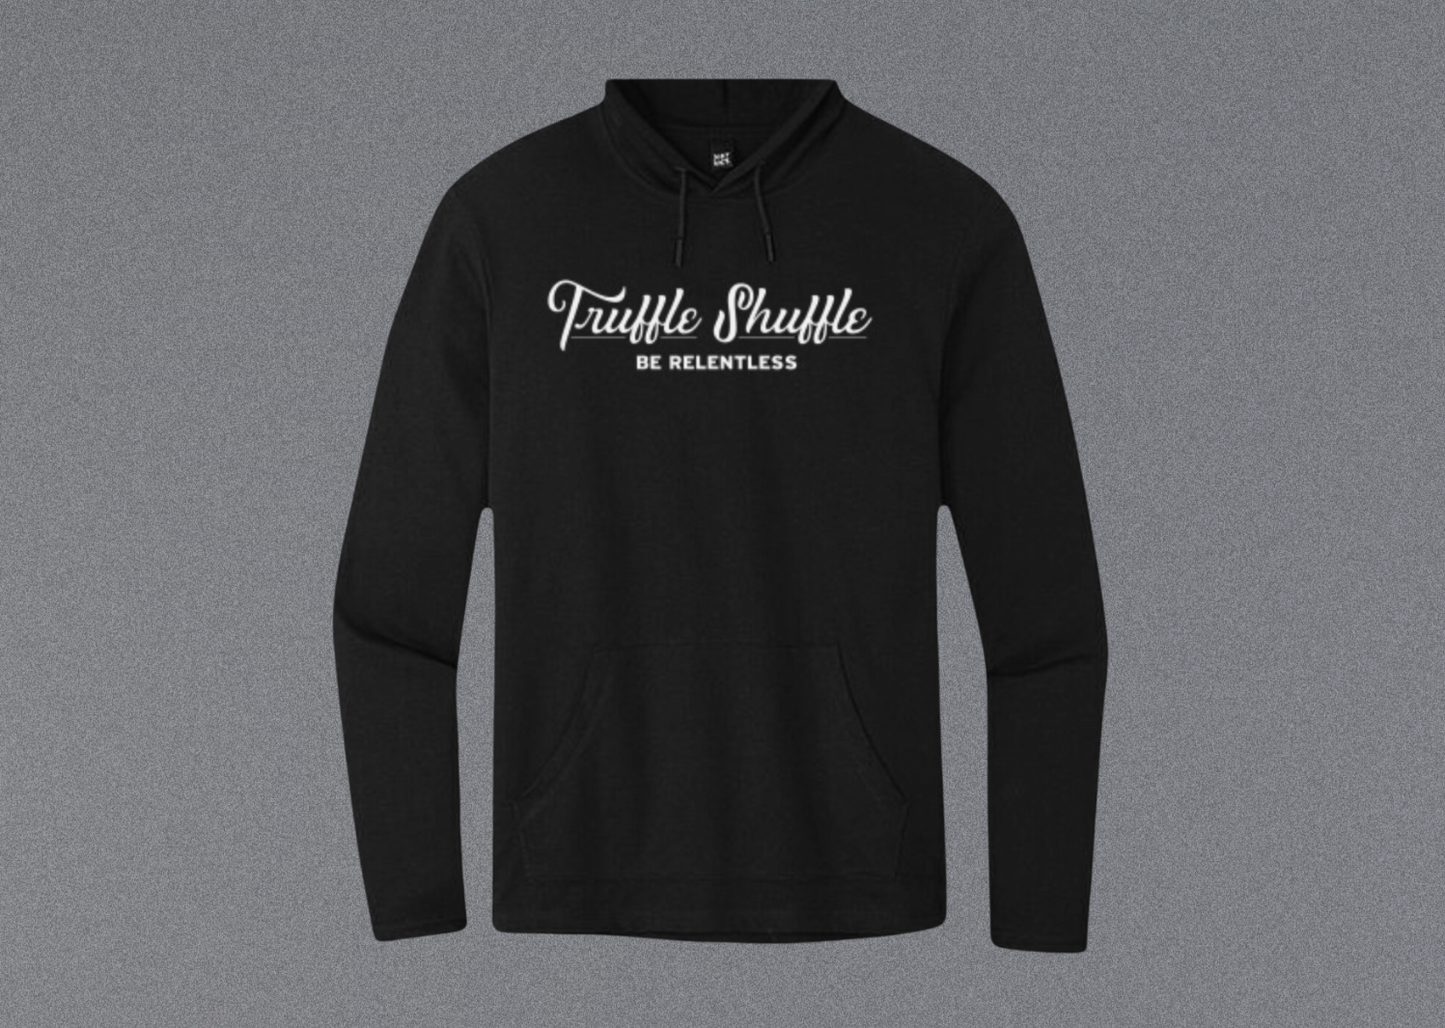 Limited Release Truffle Shuffle Hoodie